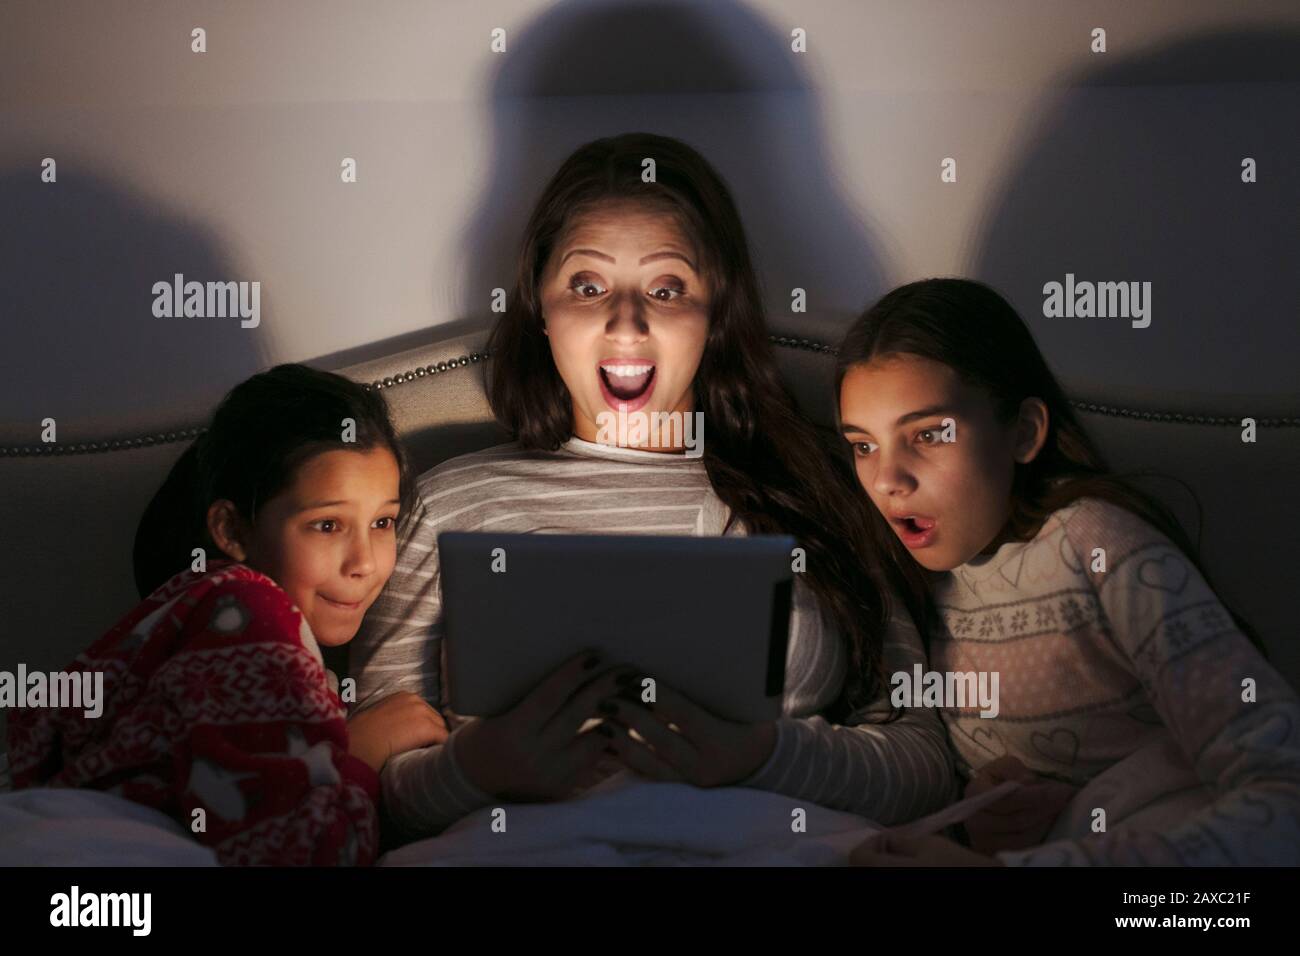 Surprised mother and daughters watching movie on digital tablet in dark bedroom Stock Photo